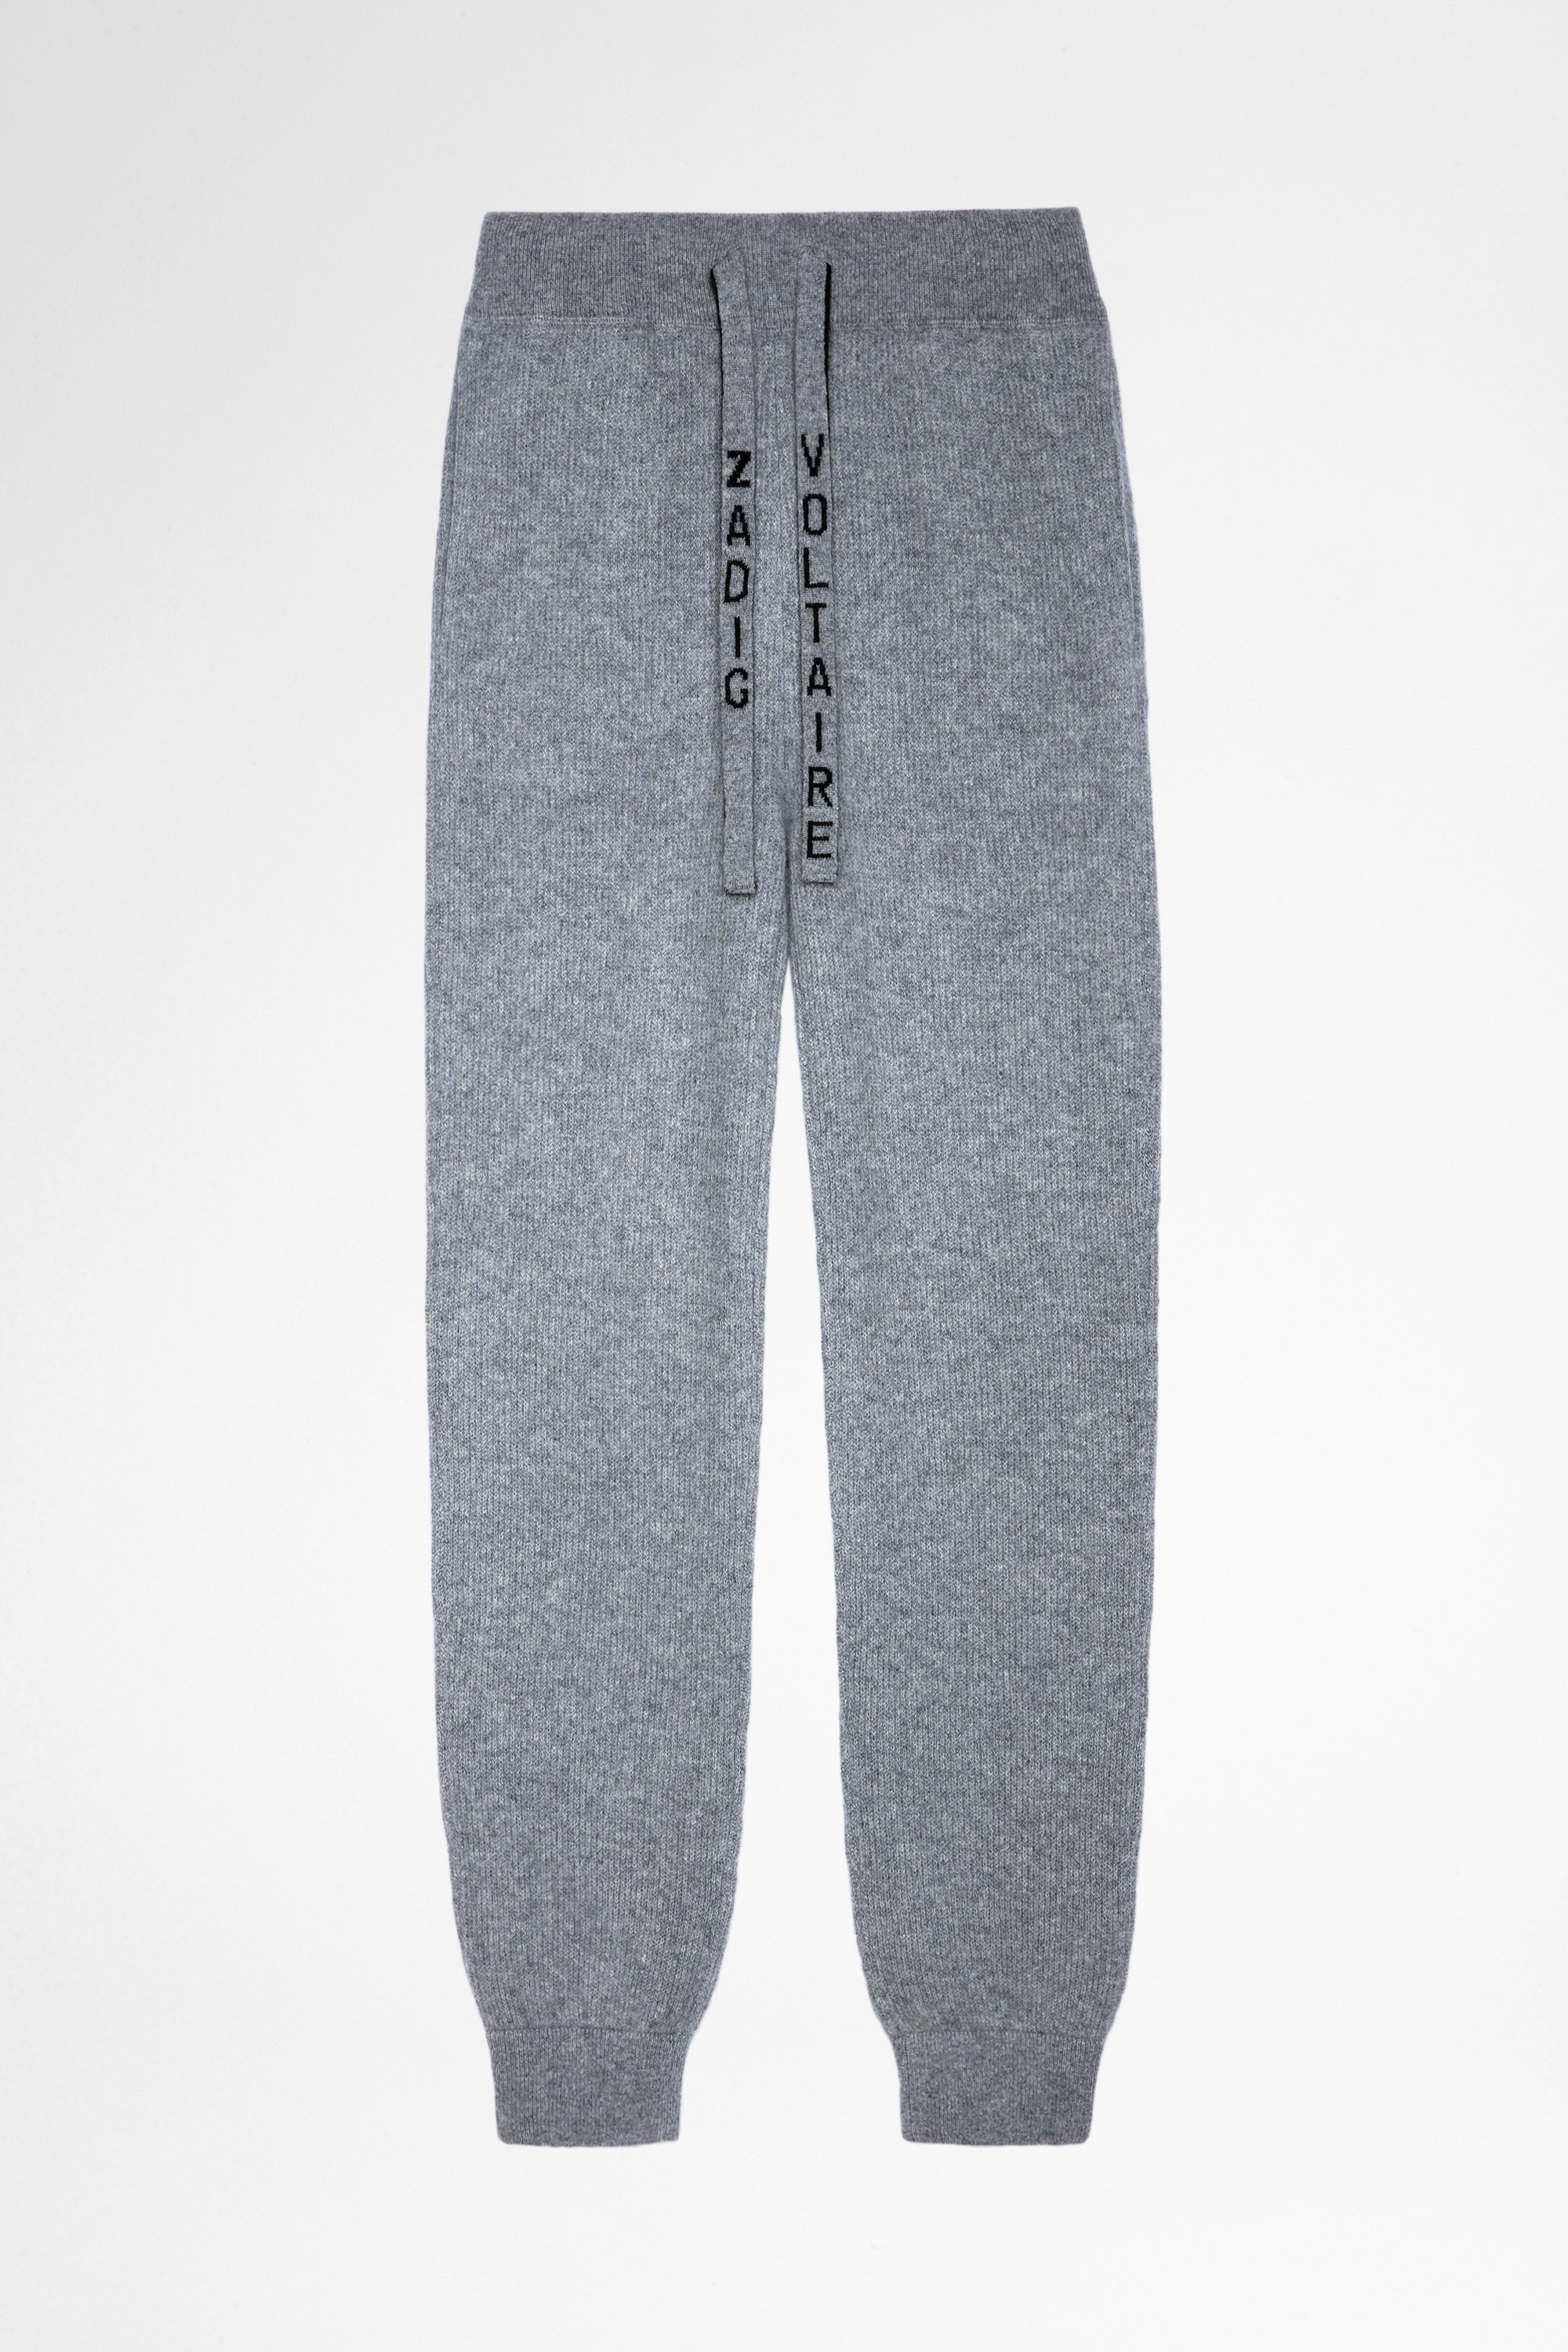 Steevy Pants Cashmere Women's gray cashmere sweatpants